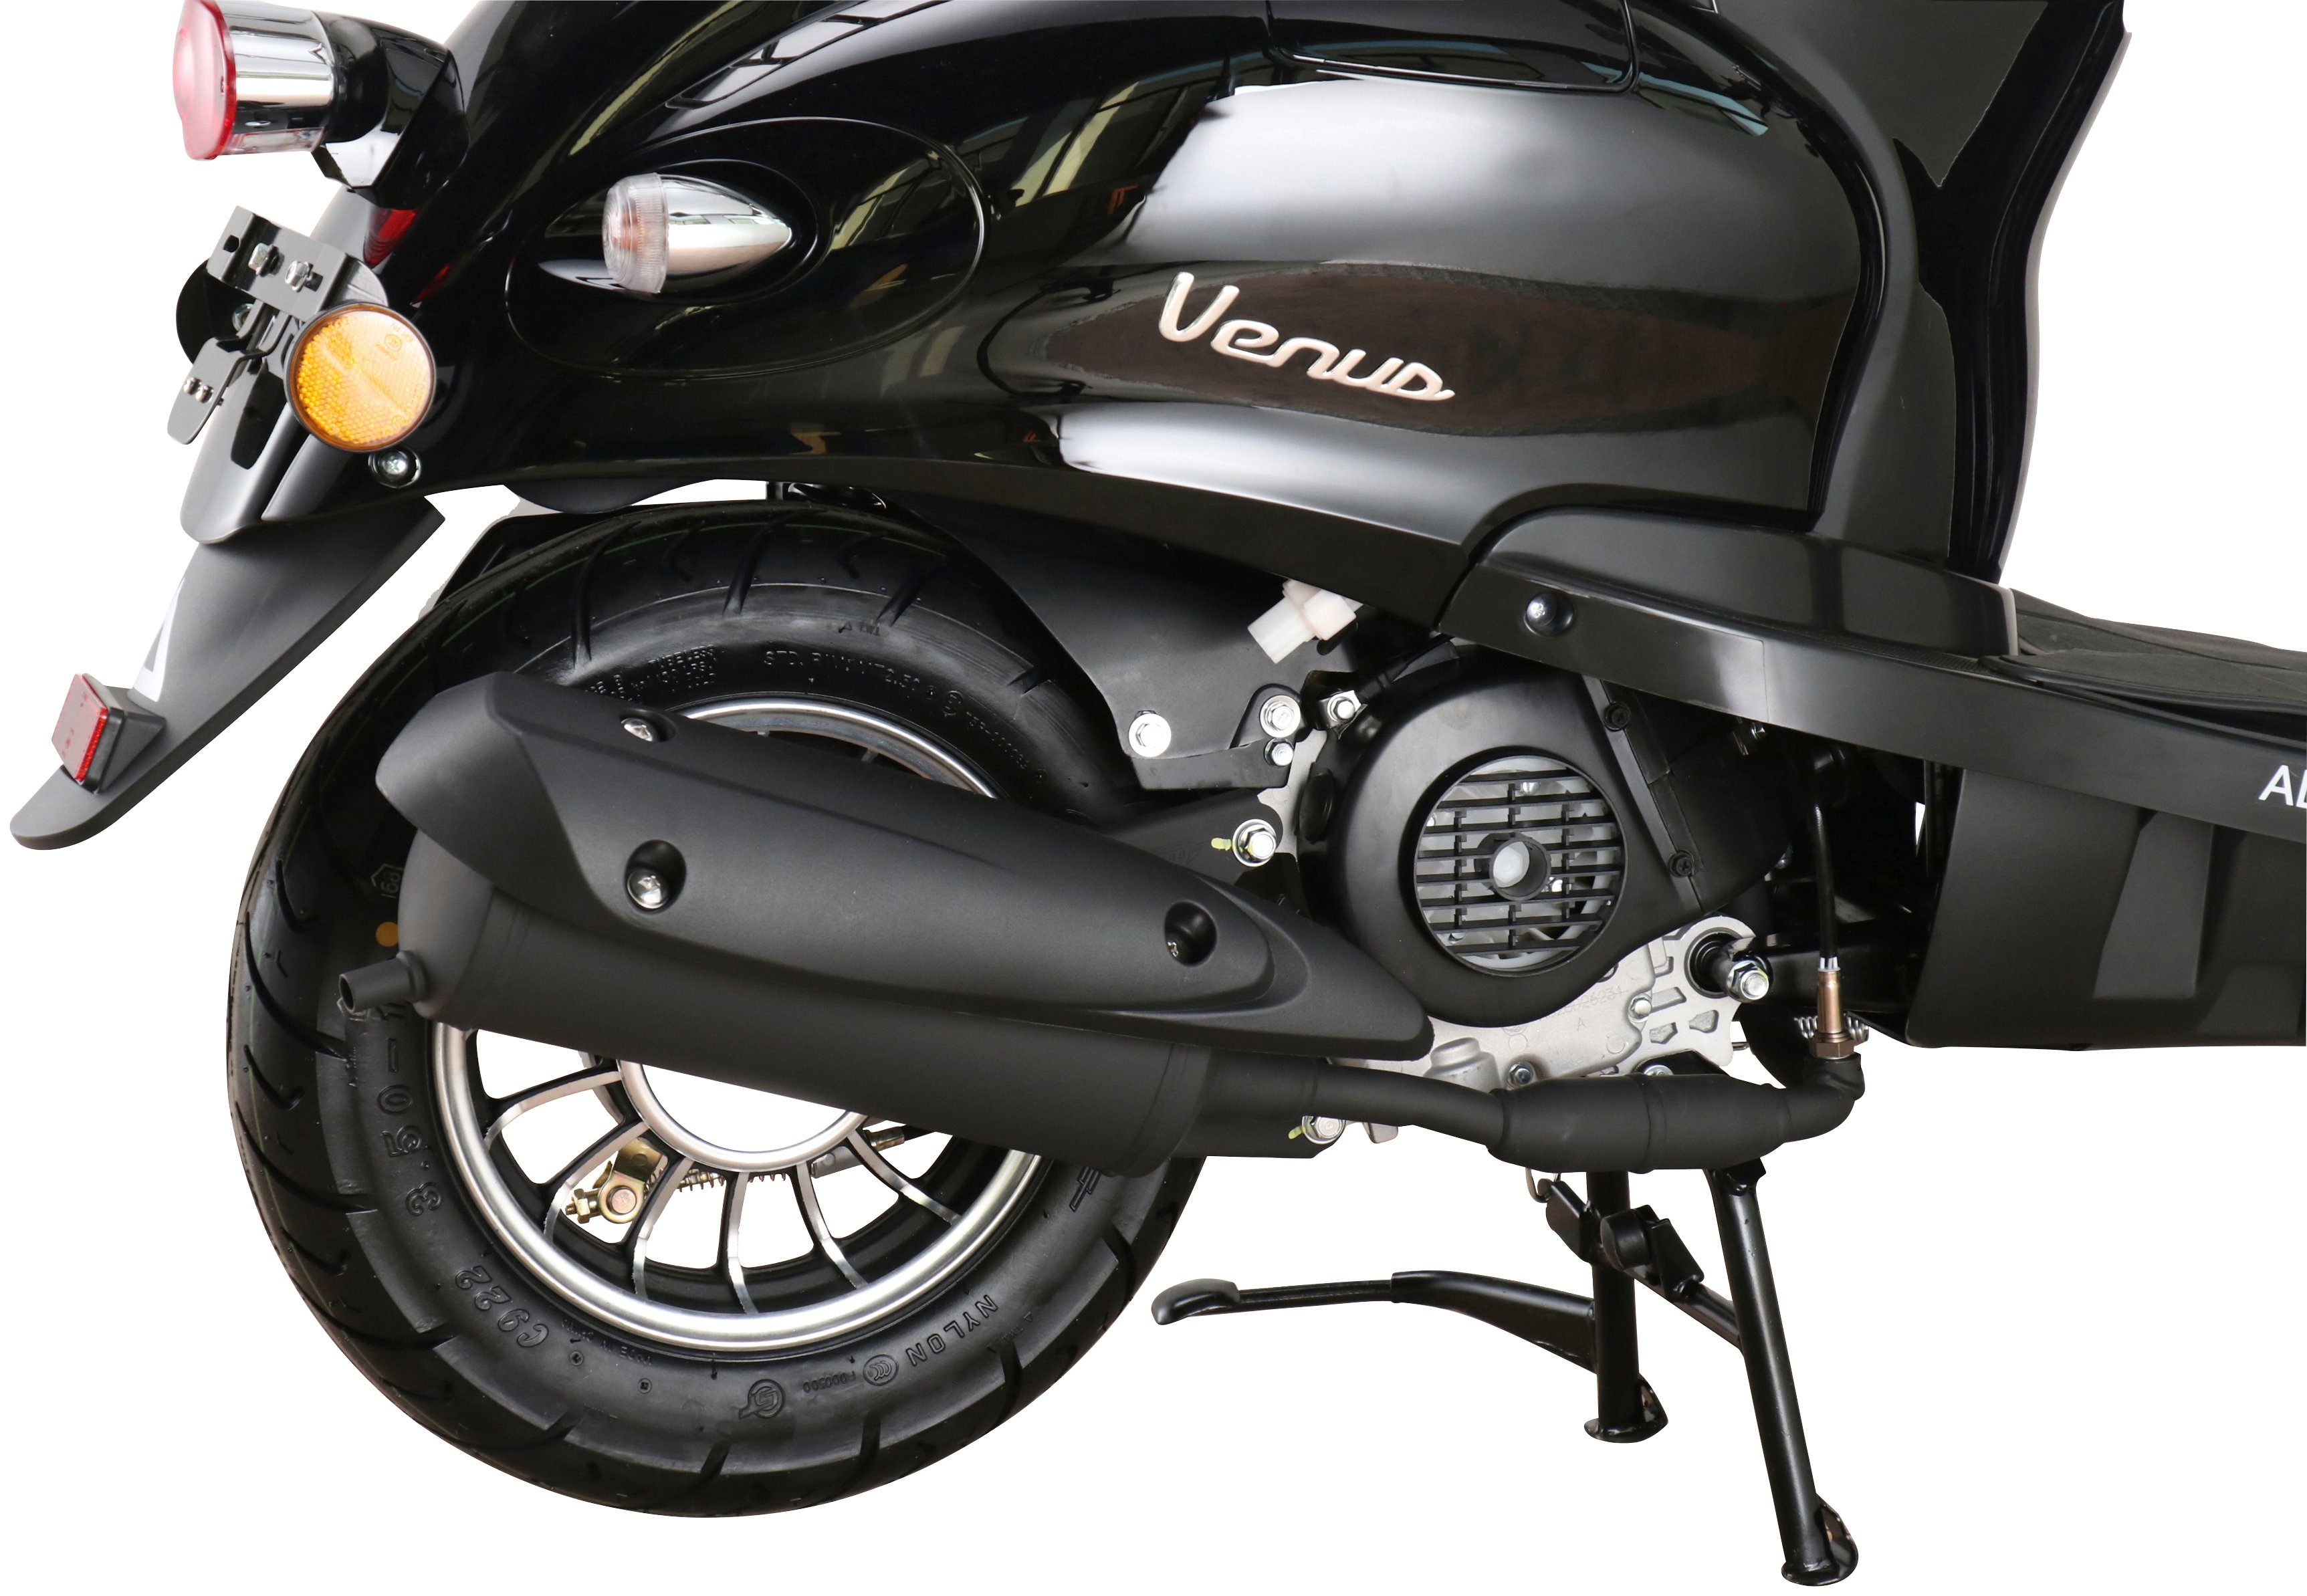 Euro ccm, Motors 5 km/h, Alpha Motorroller 50 Venus, 45